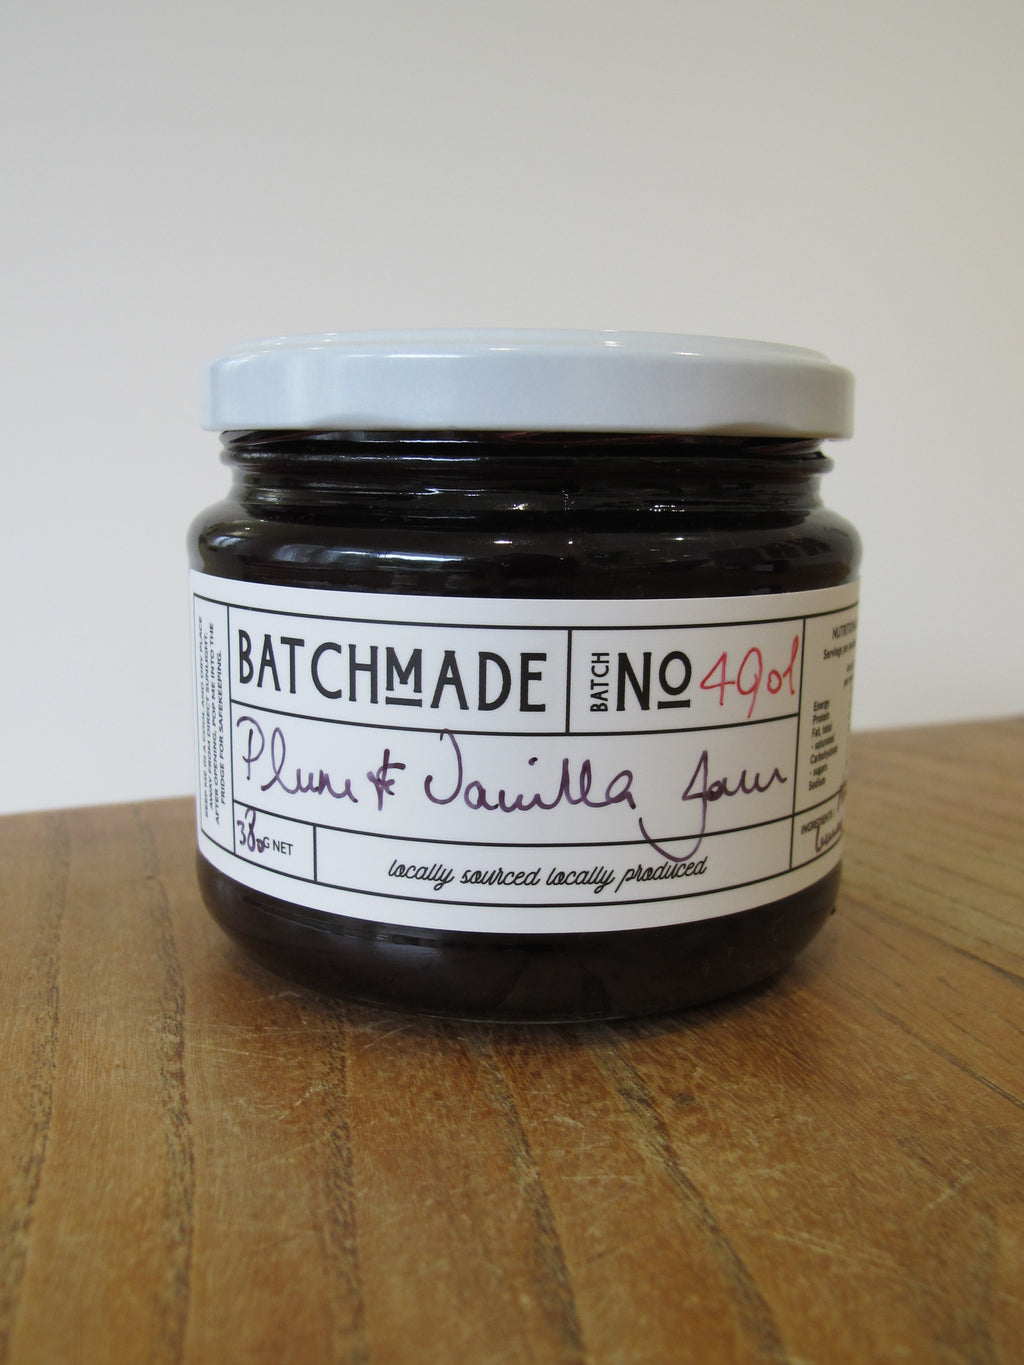 BatchMade plum and vanilla jam